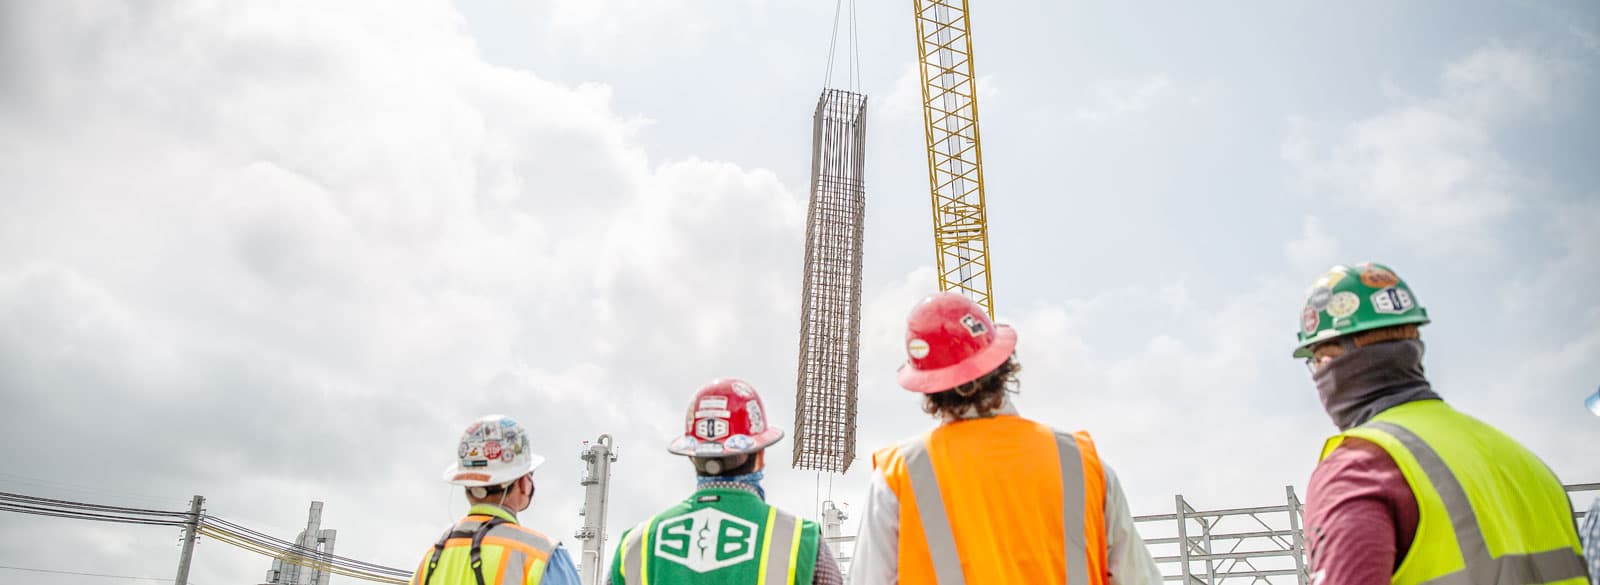 S&B construction workers watching a crane lift up rebar